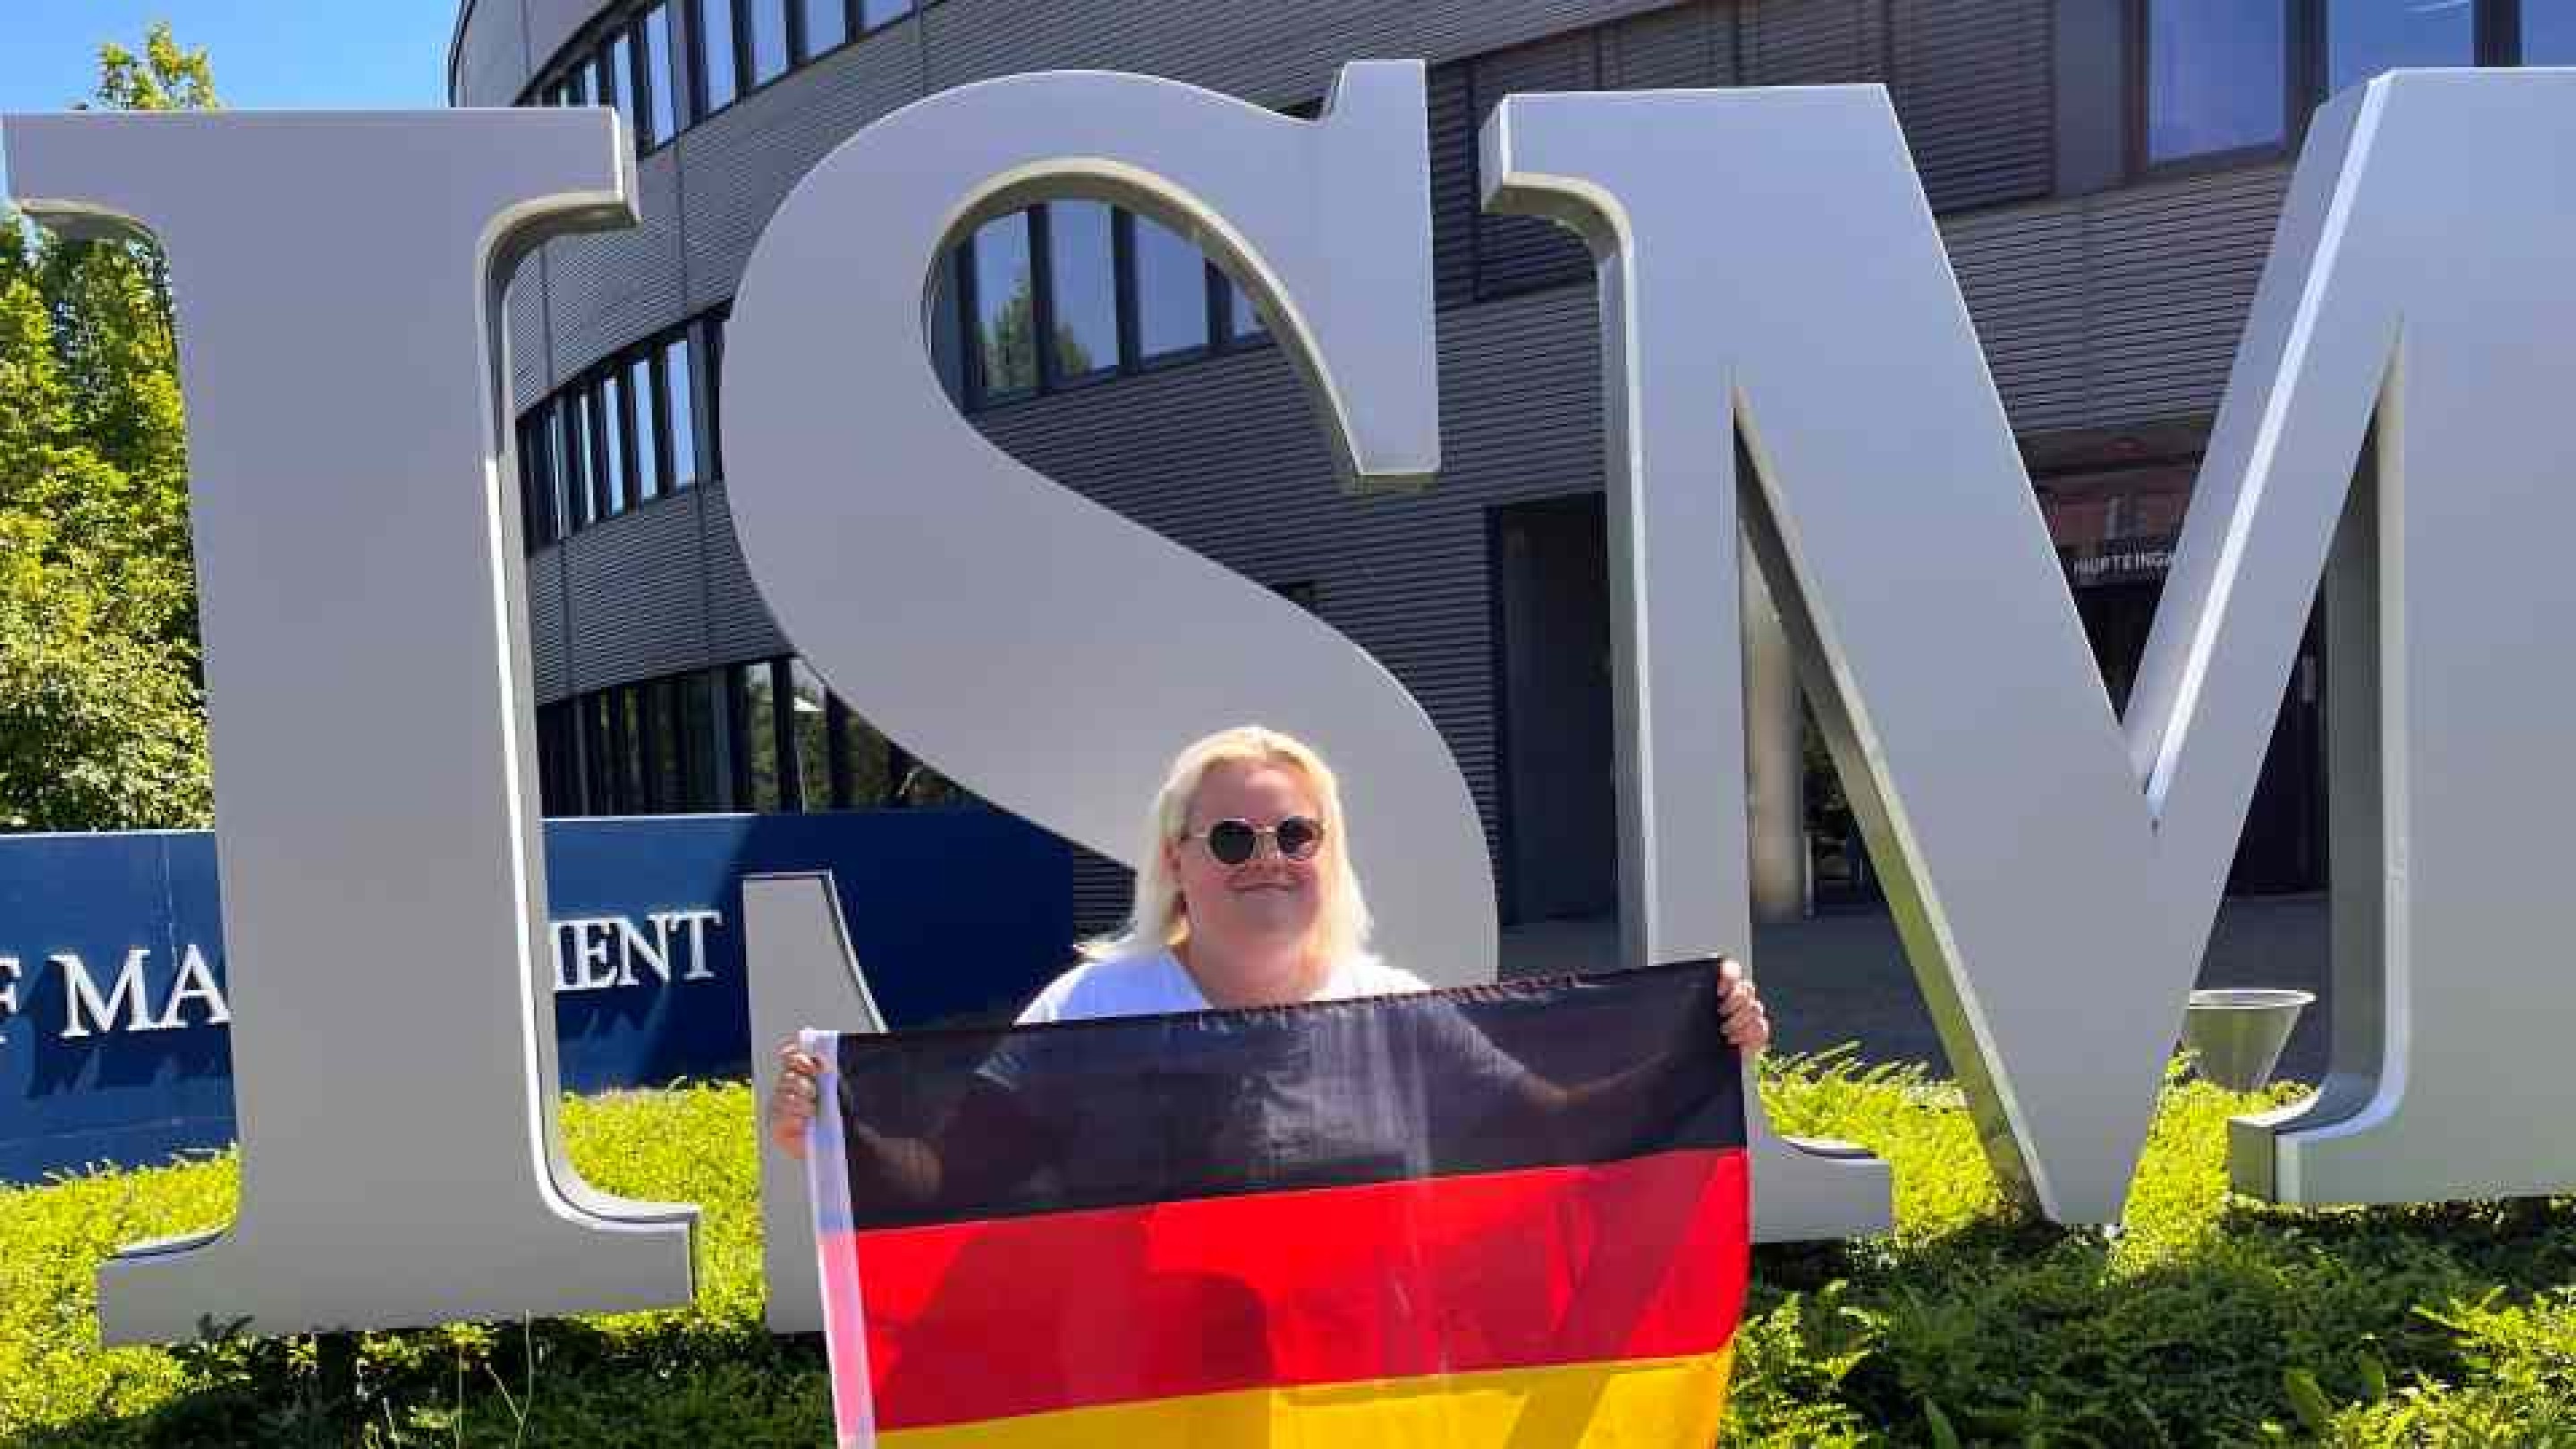 My semester abroad at ISM Dortmund